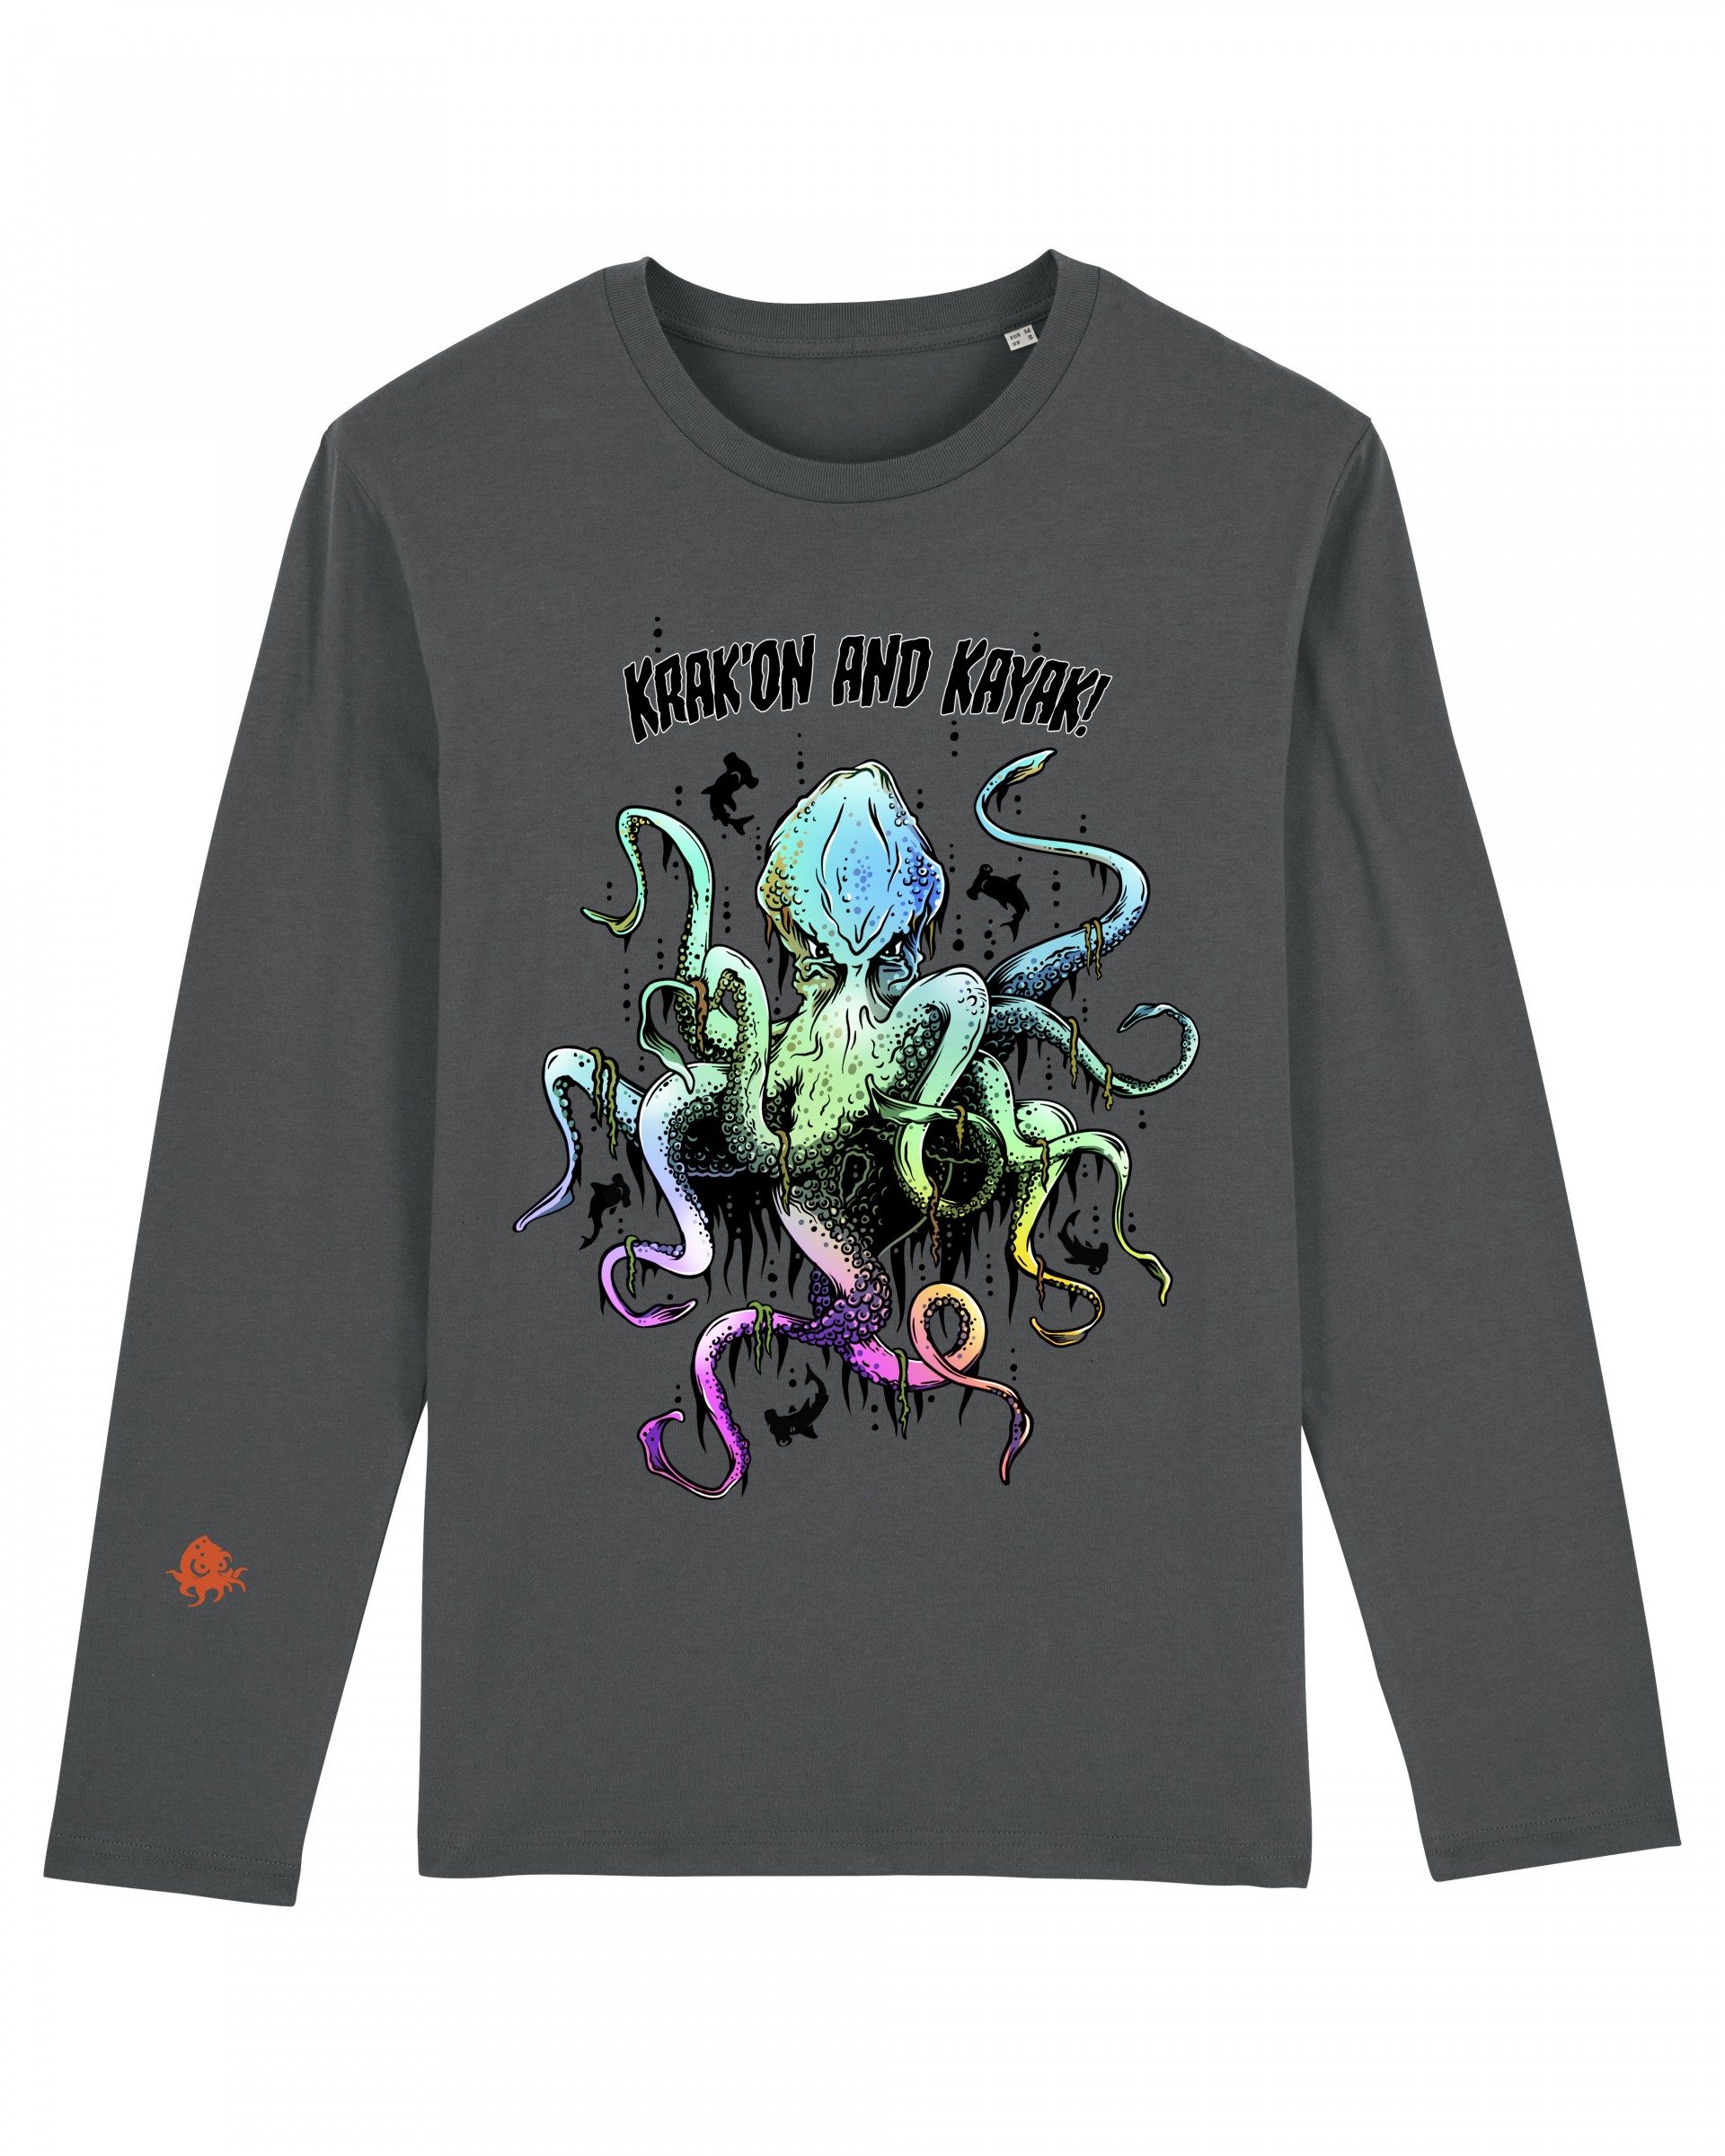 Front of long sleeve quality grey Kraken merchandise shirt